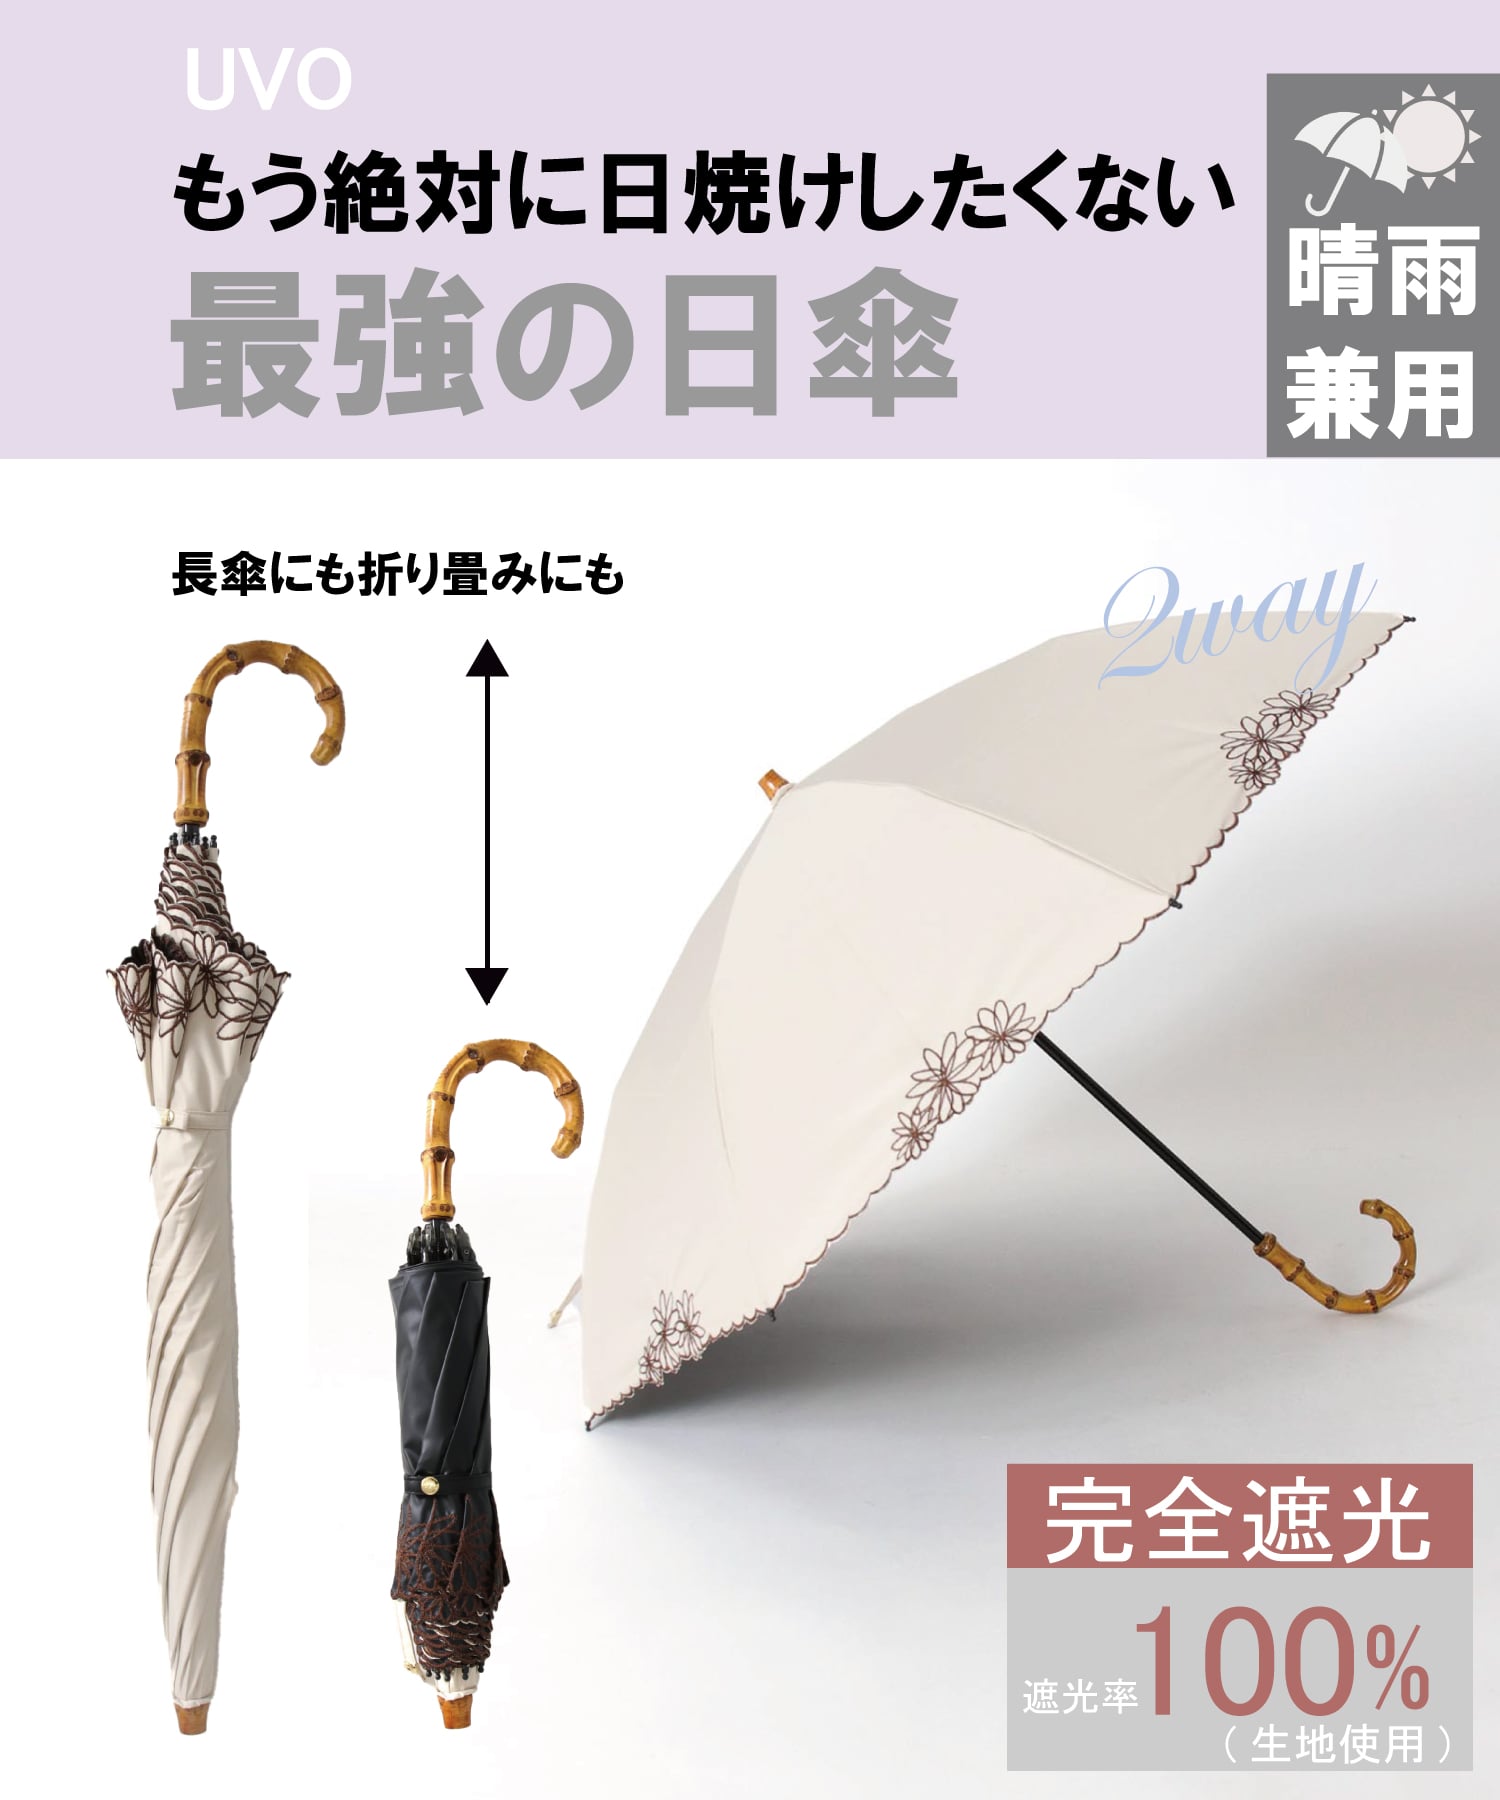 UVO最強の日傘 2段 刺繍フラワーmini